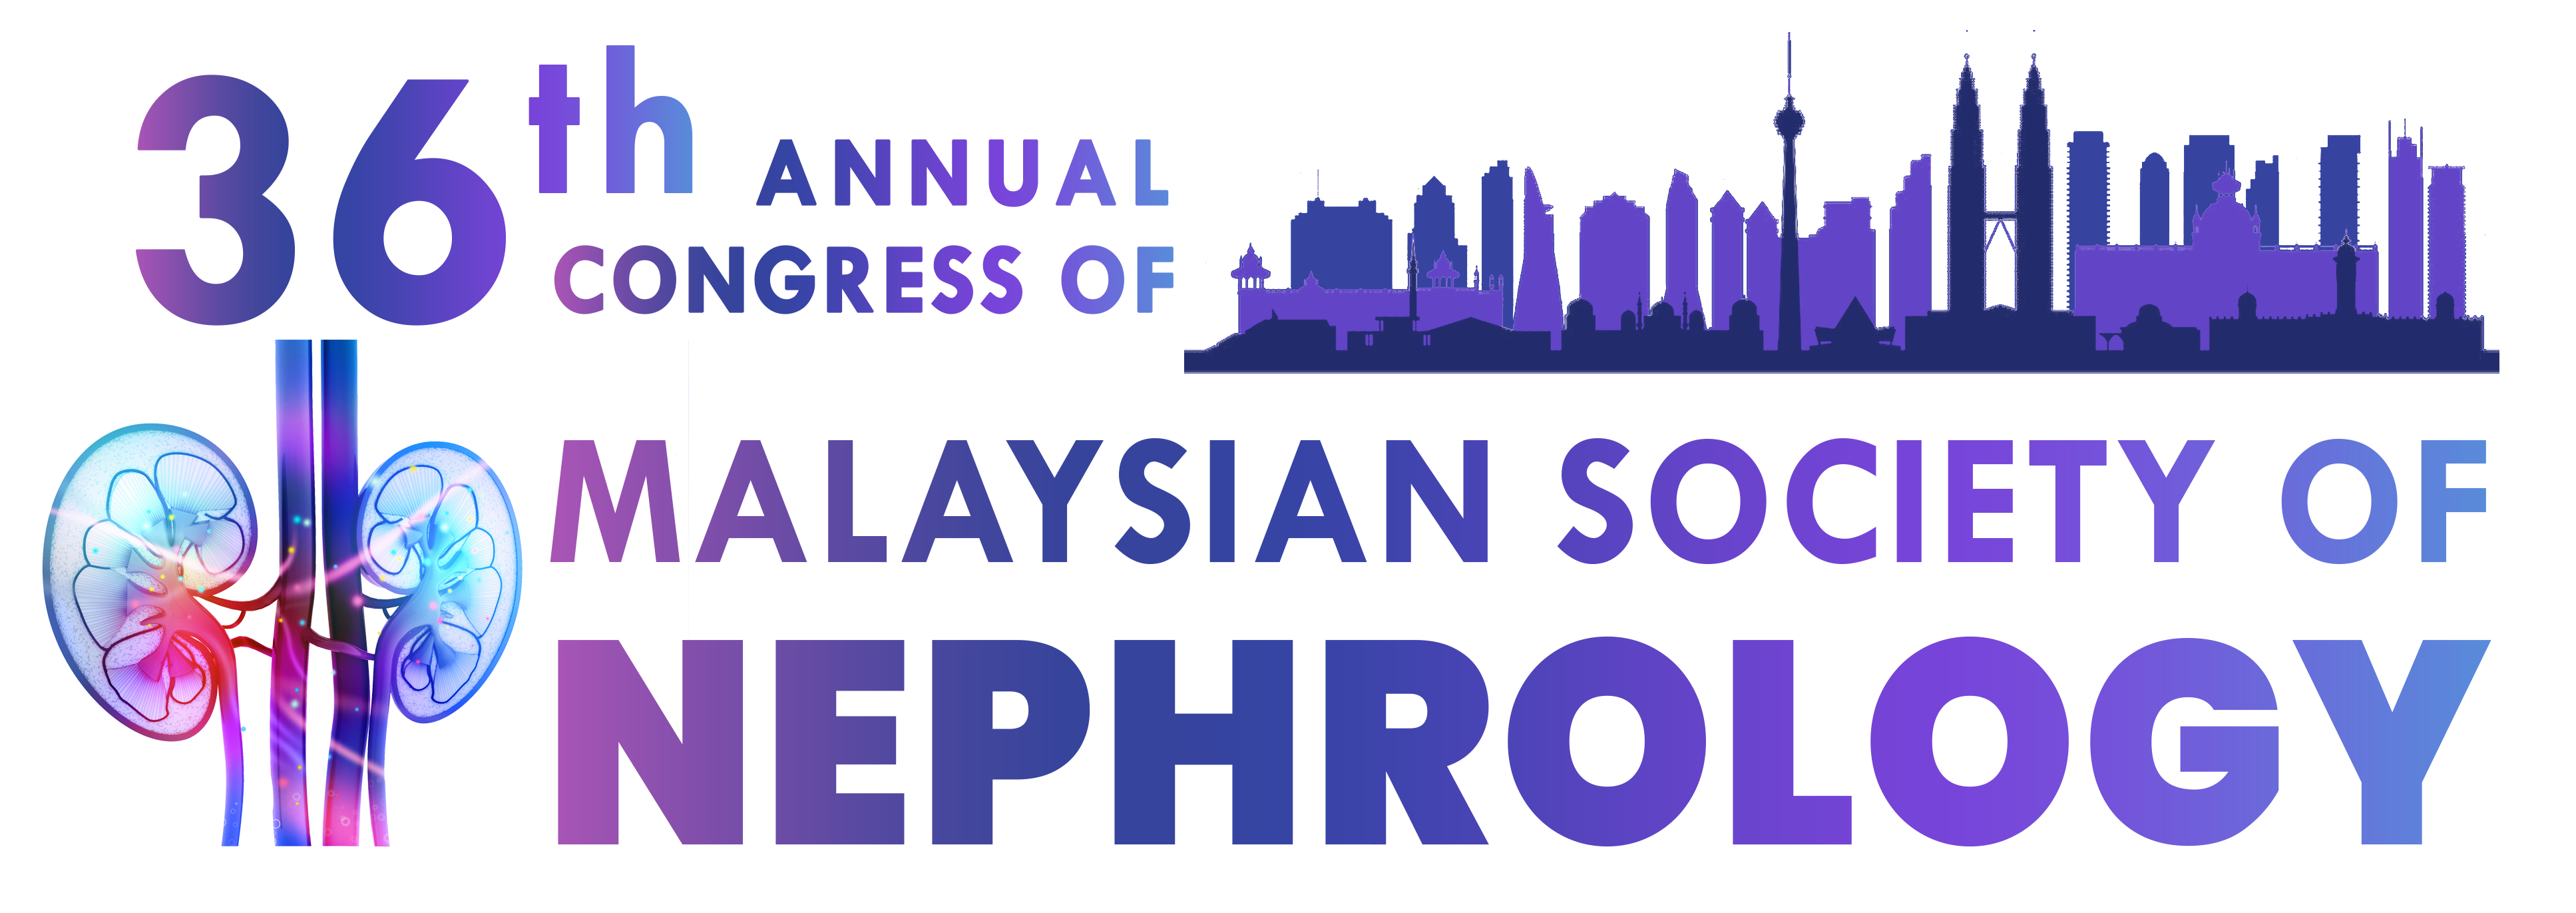 36th Annual Congress of Malaysian Society of Nephrology (MSN 2021)